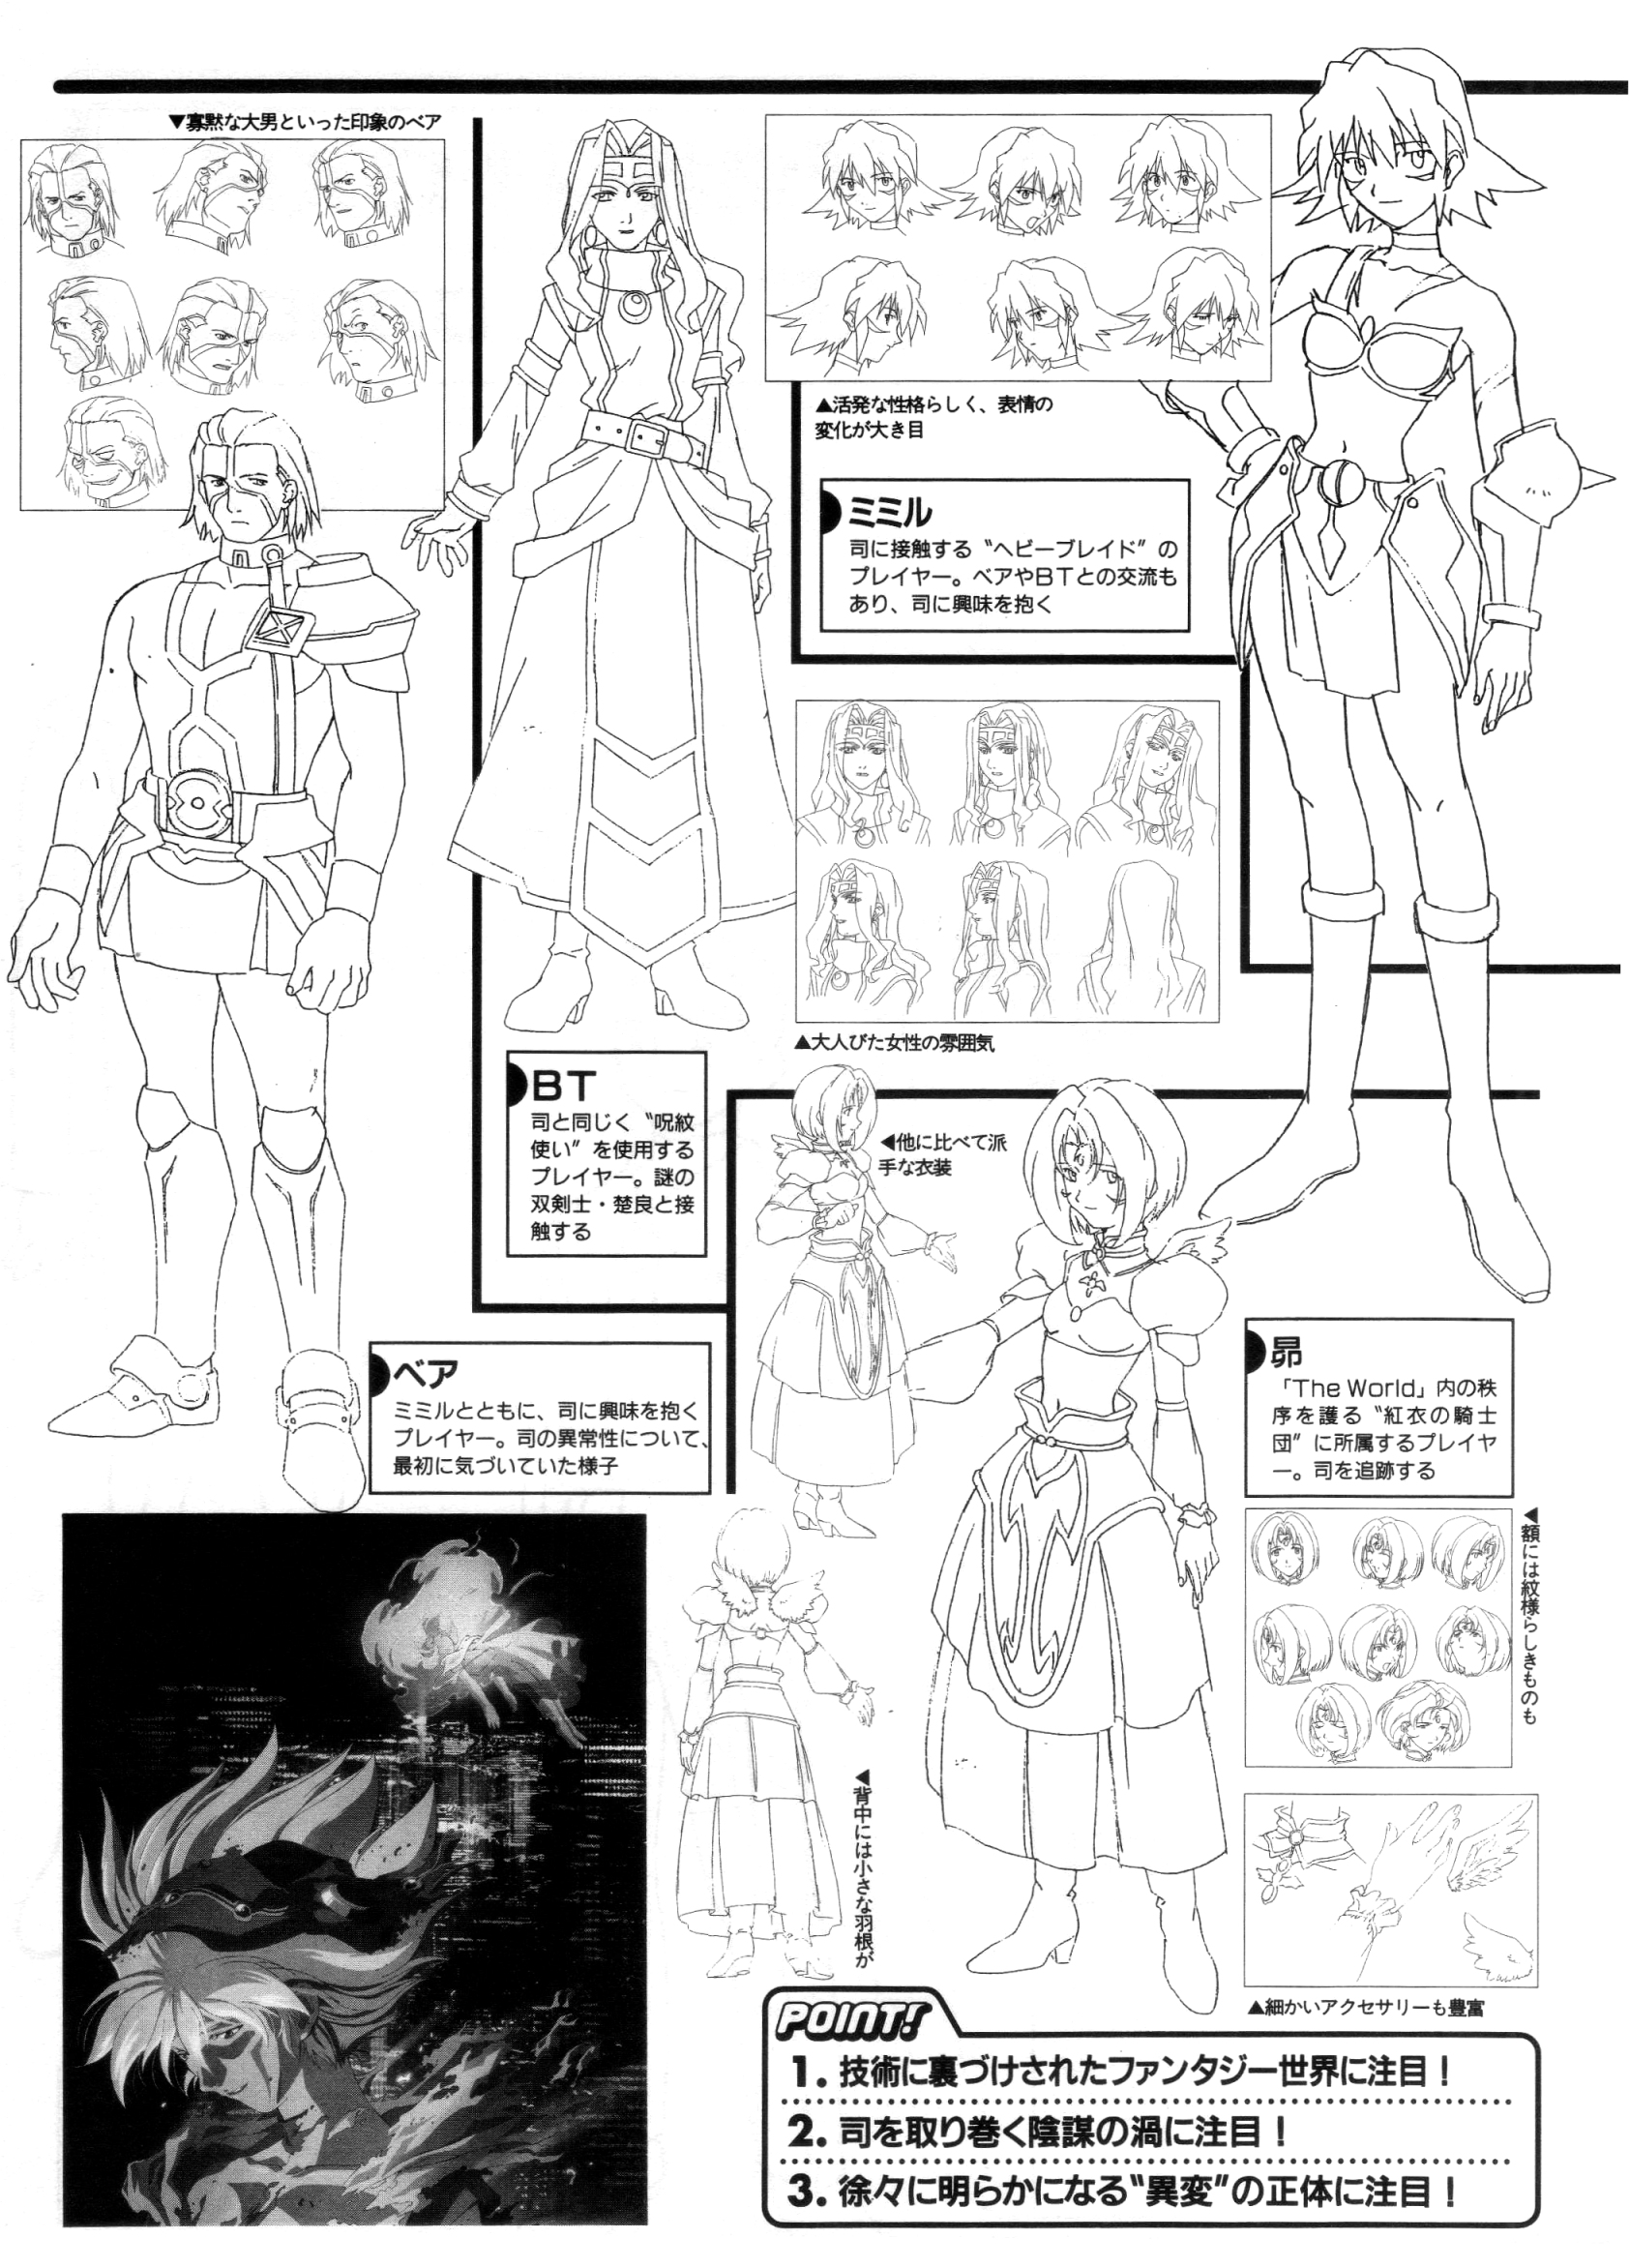 AnimArchive on X: .hack//SIGN by character designer Yukiko Ban / Animage  magazine (05/2002)   / X